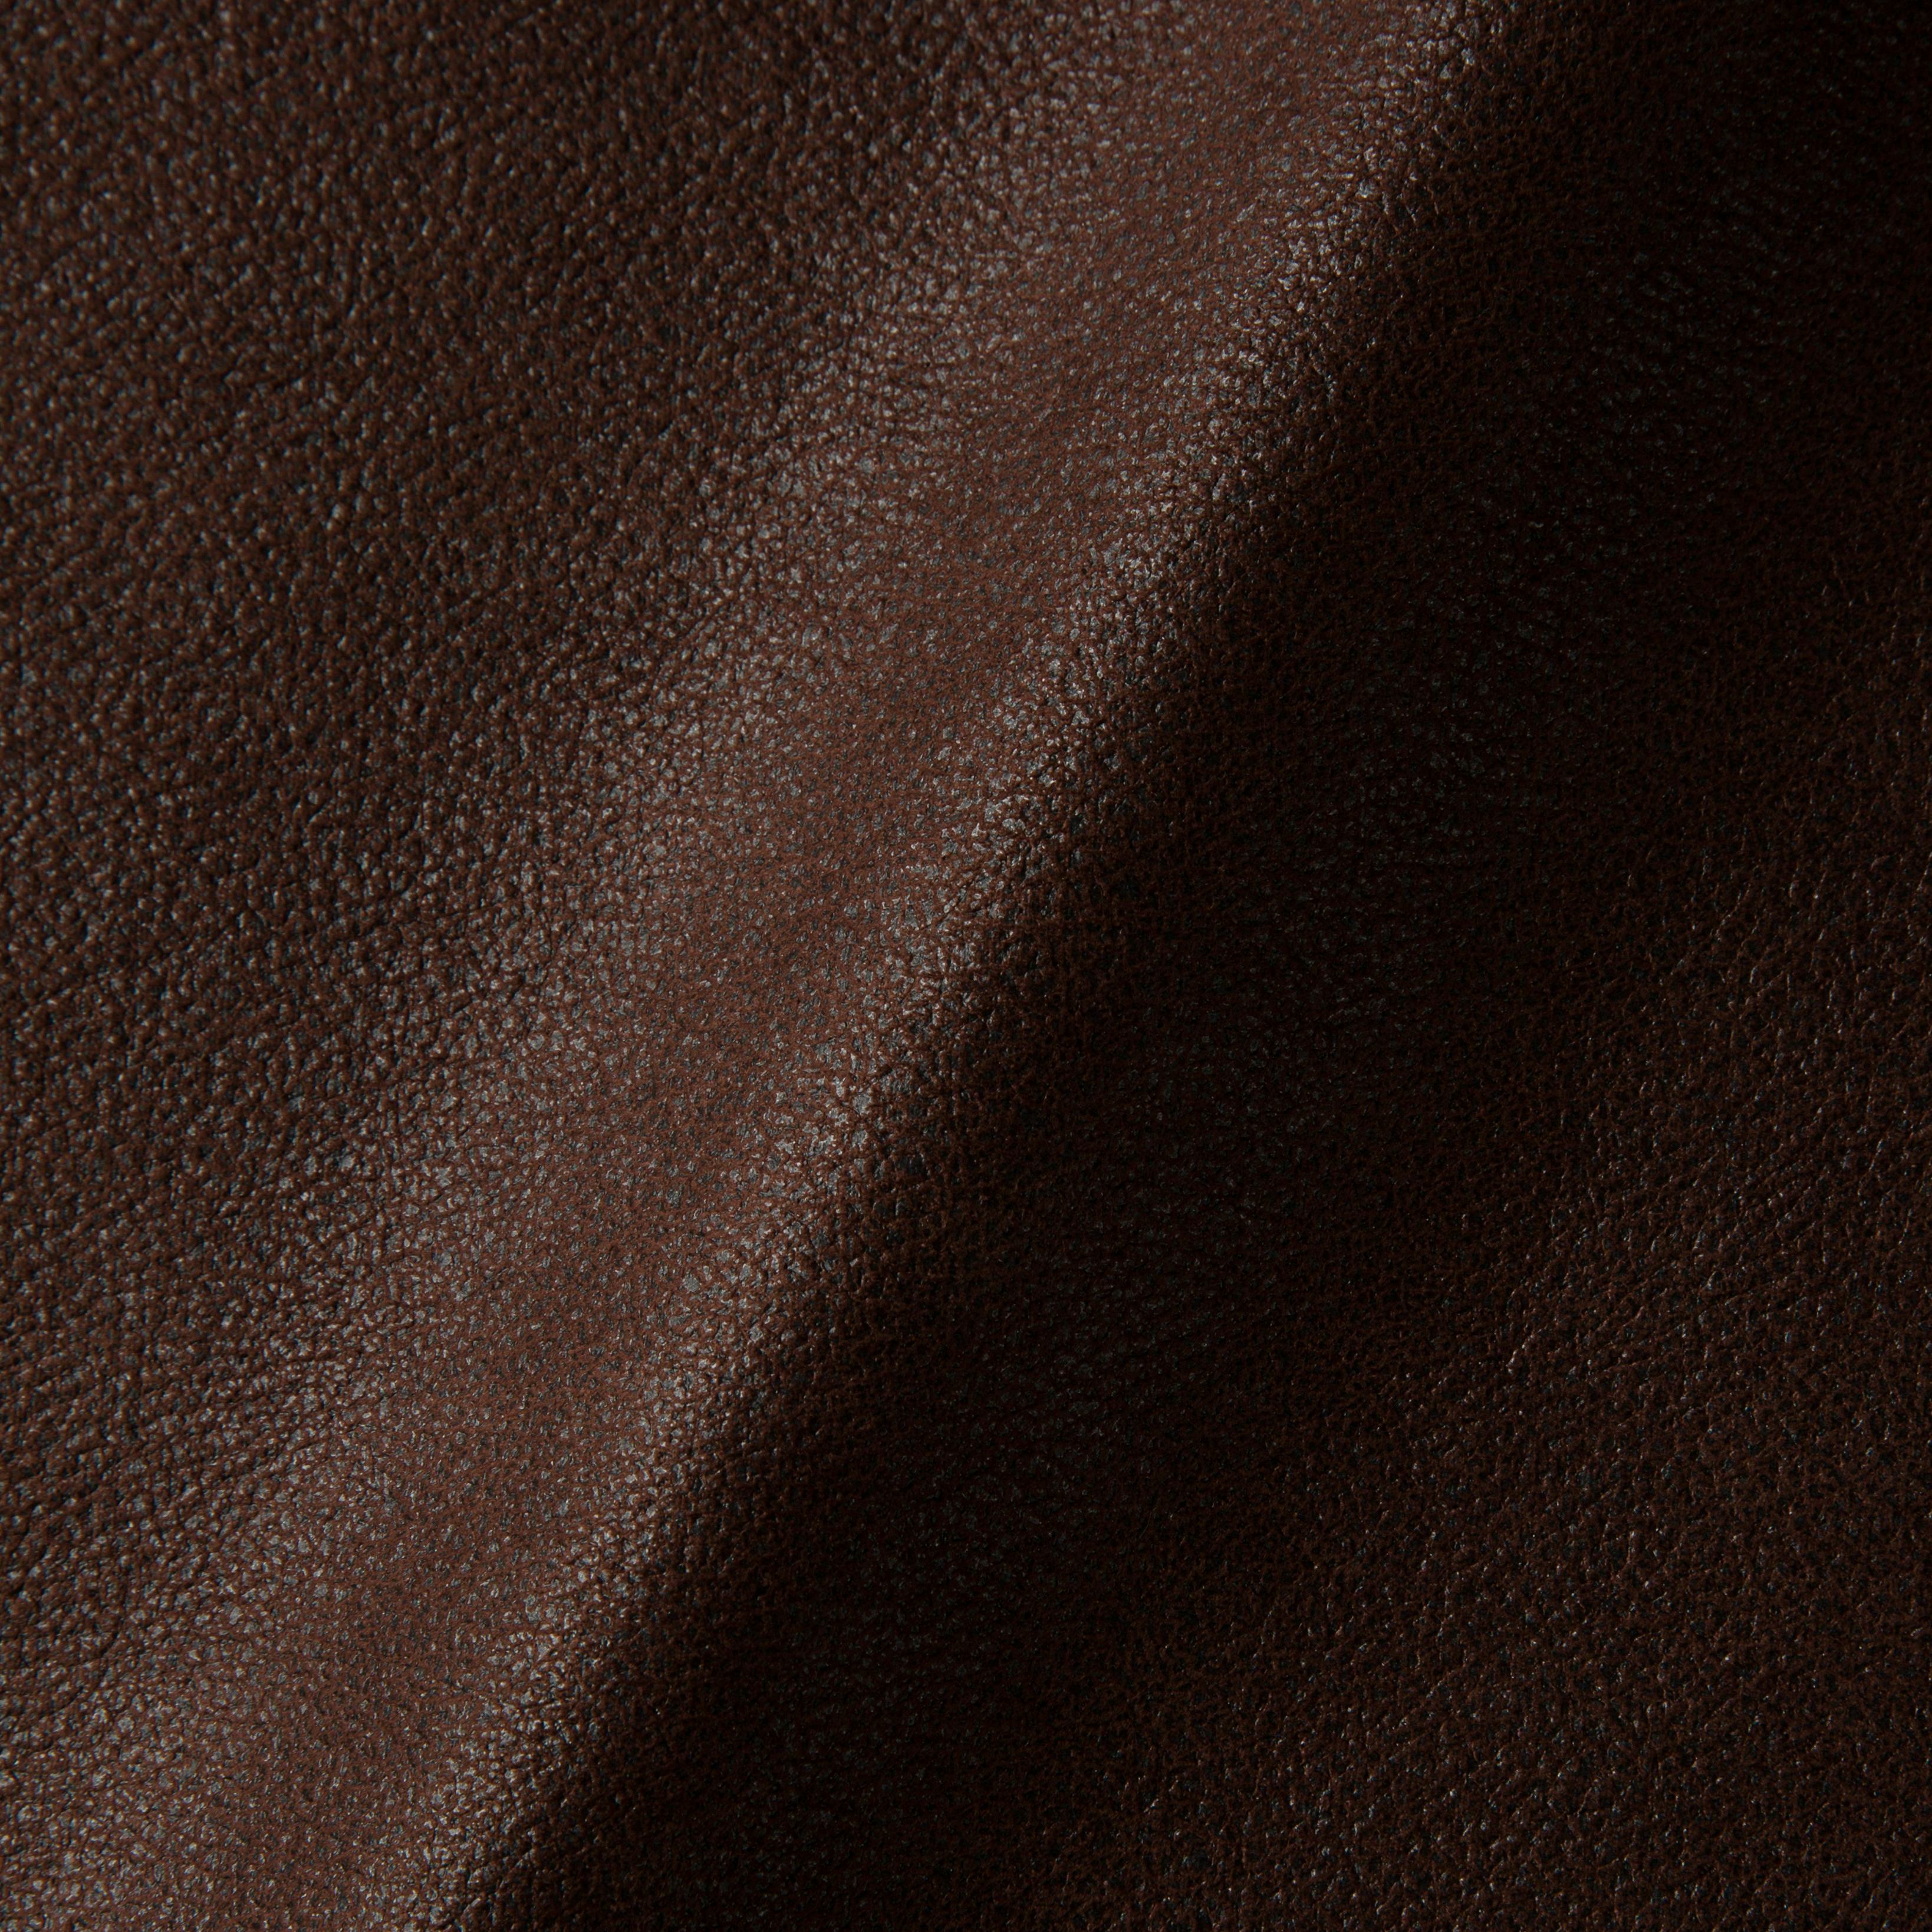 Fabric sample Abbracci brown